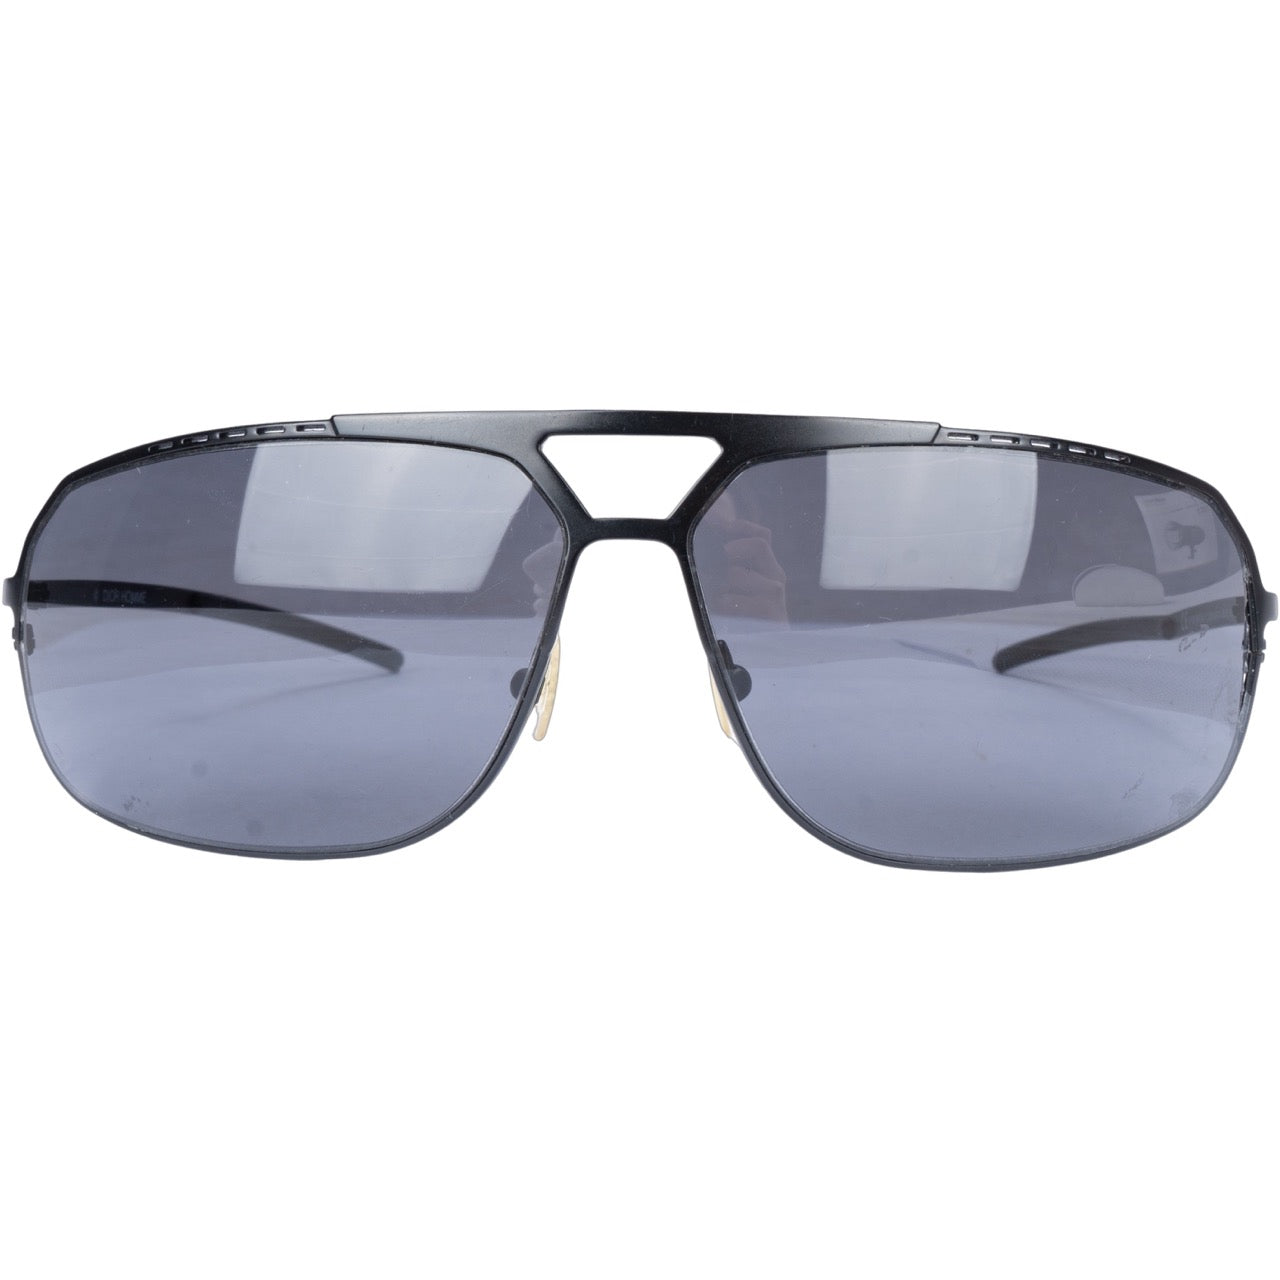 Dior Homme Black Sunglasses